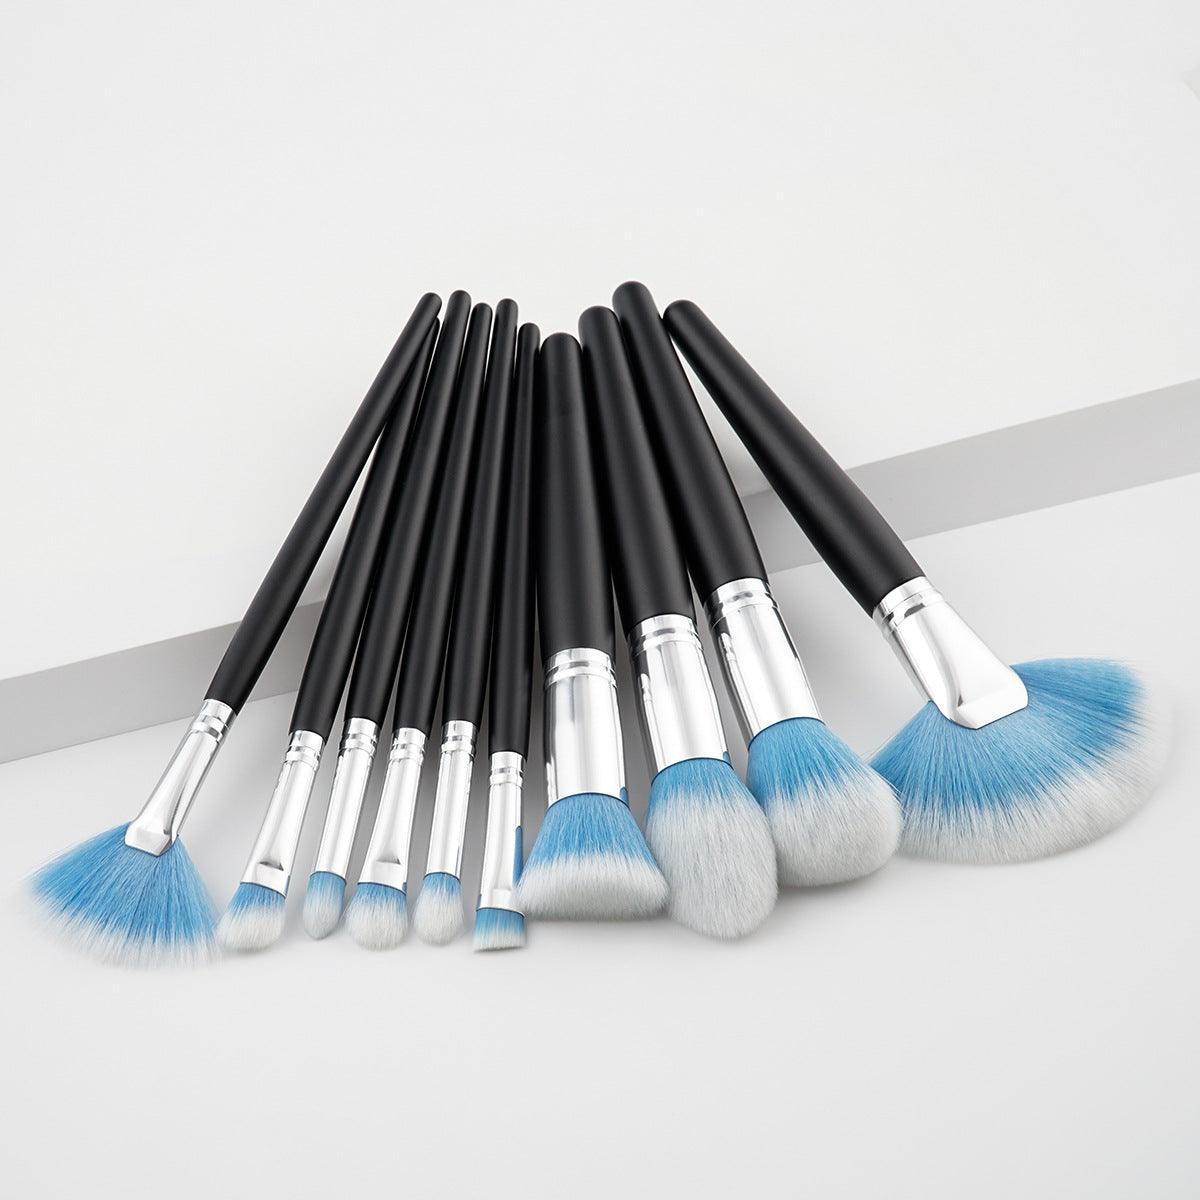 10 beauty makeup brushes - Nioor